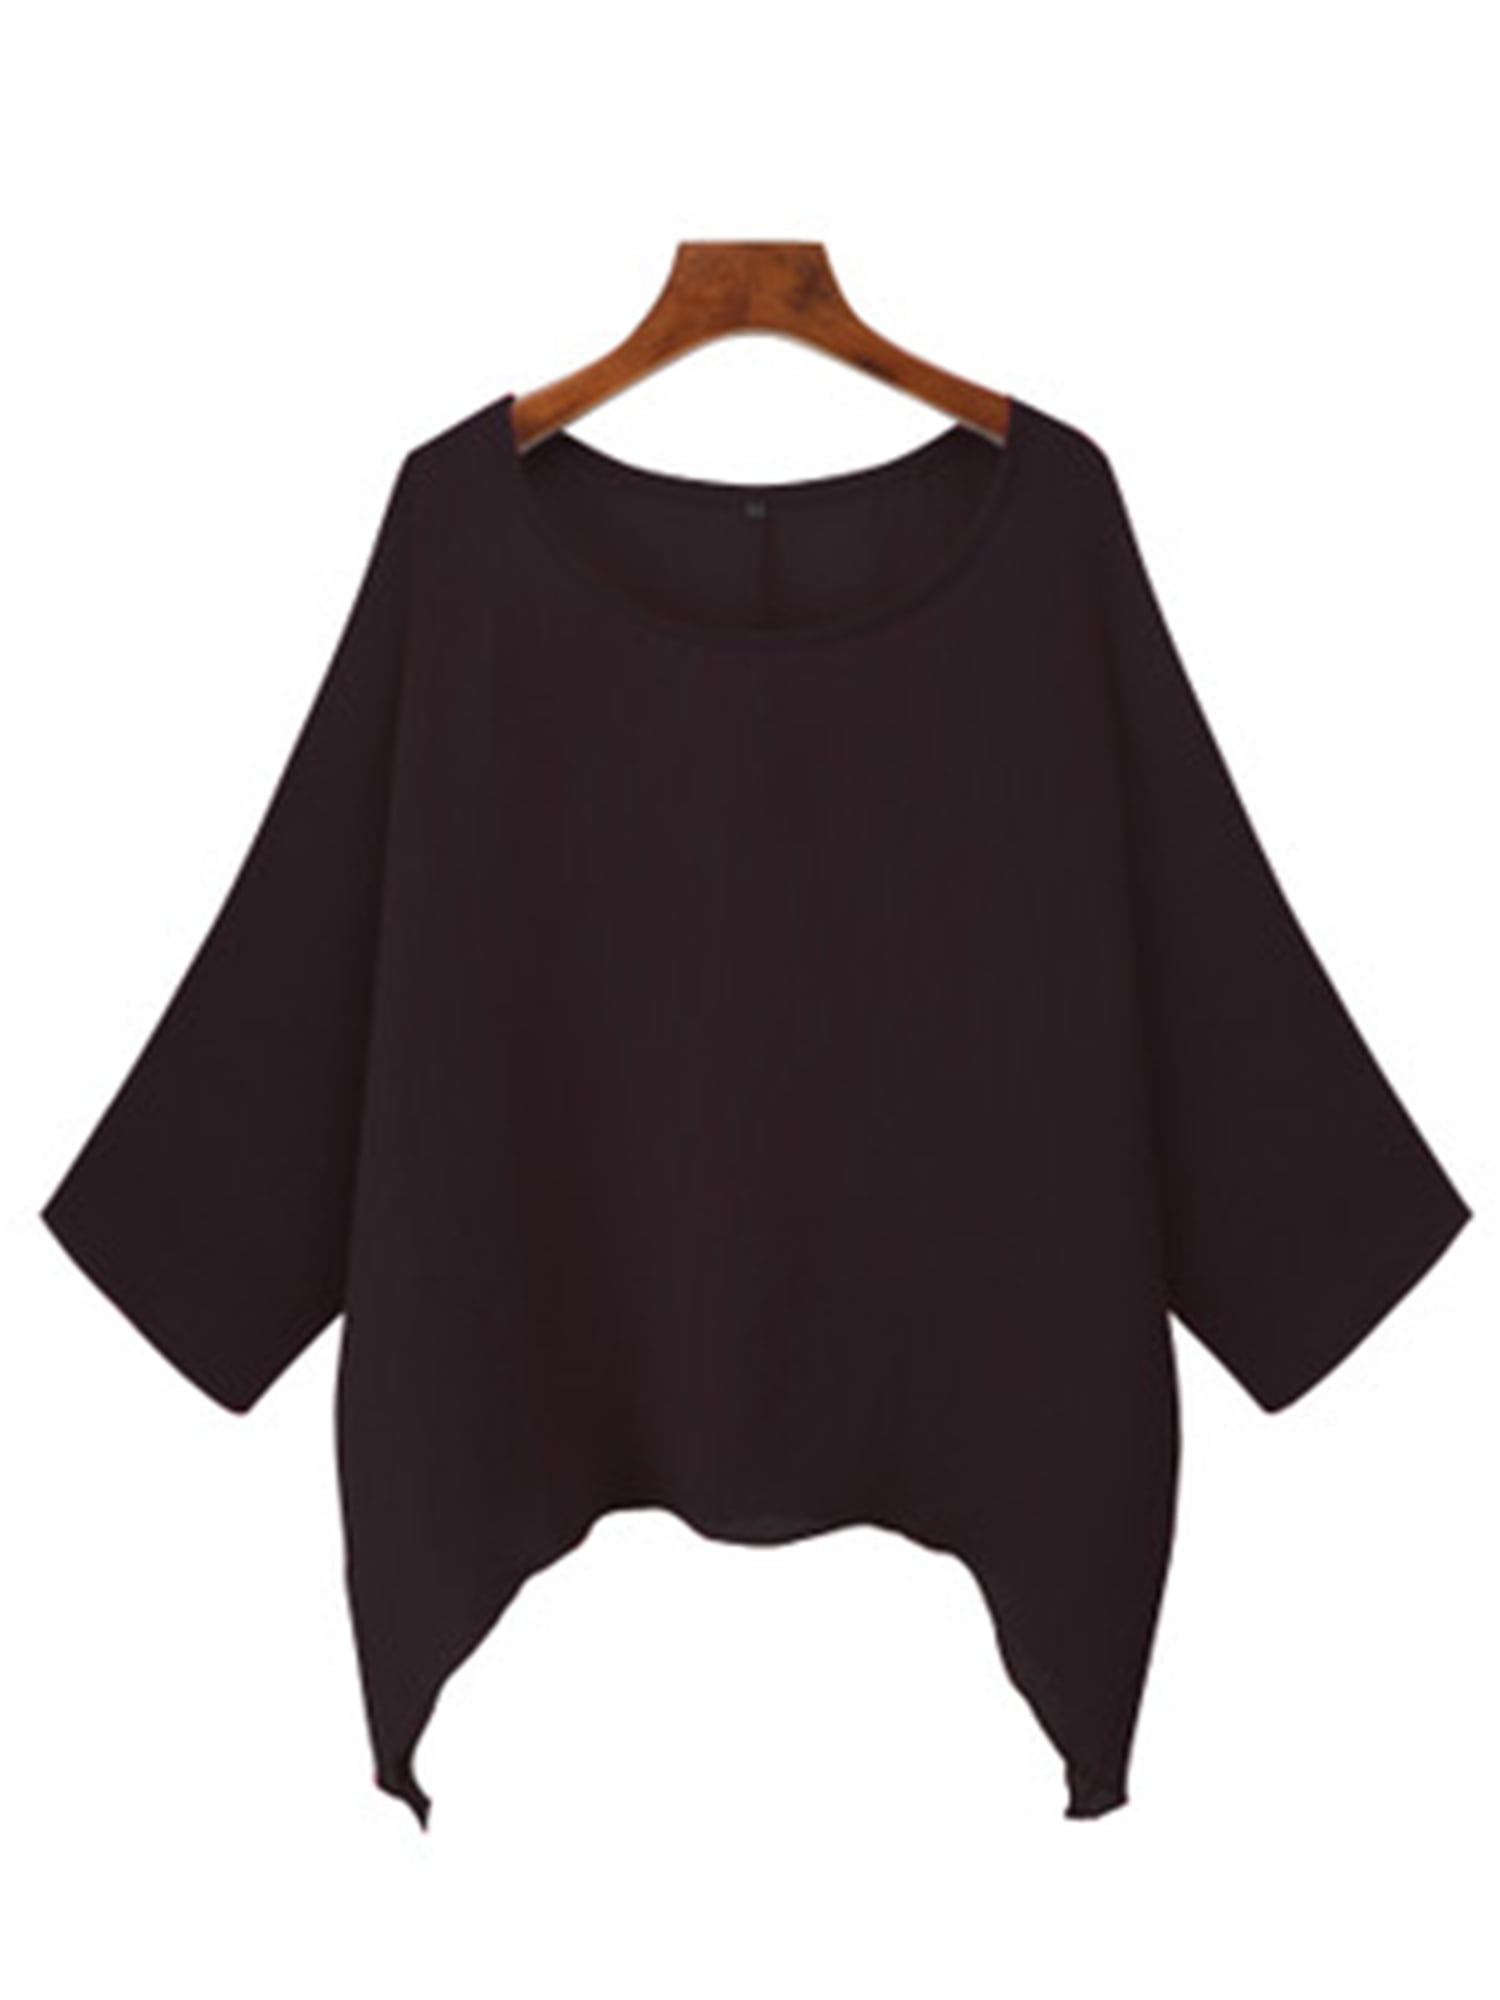 Women Bat Shirt Bat Wing Poncho Tunic Dress Top Solid Scoop Neck Long Sleeve Loose Blouse Top Oversize Gray 